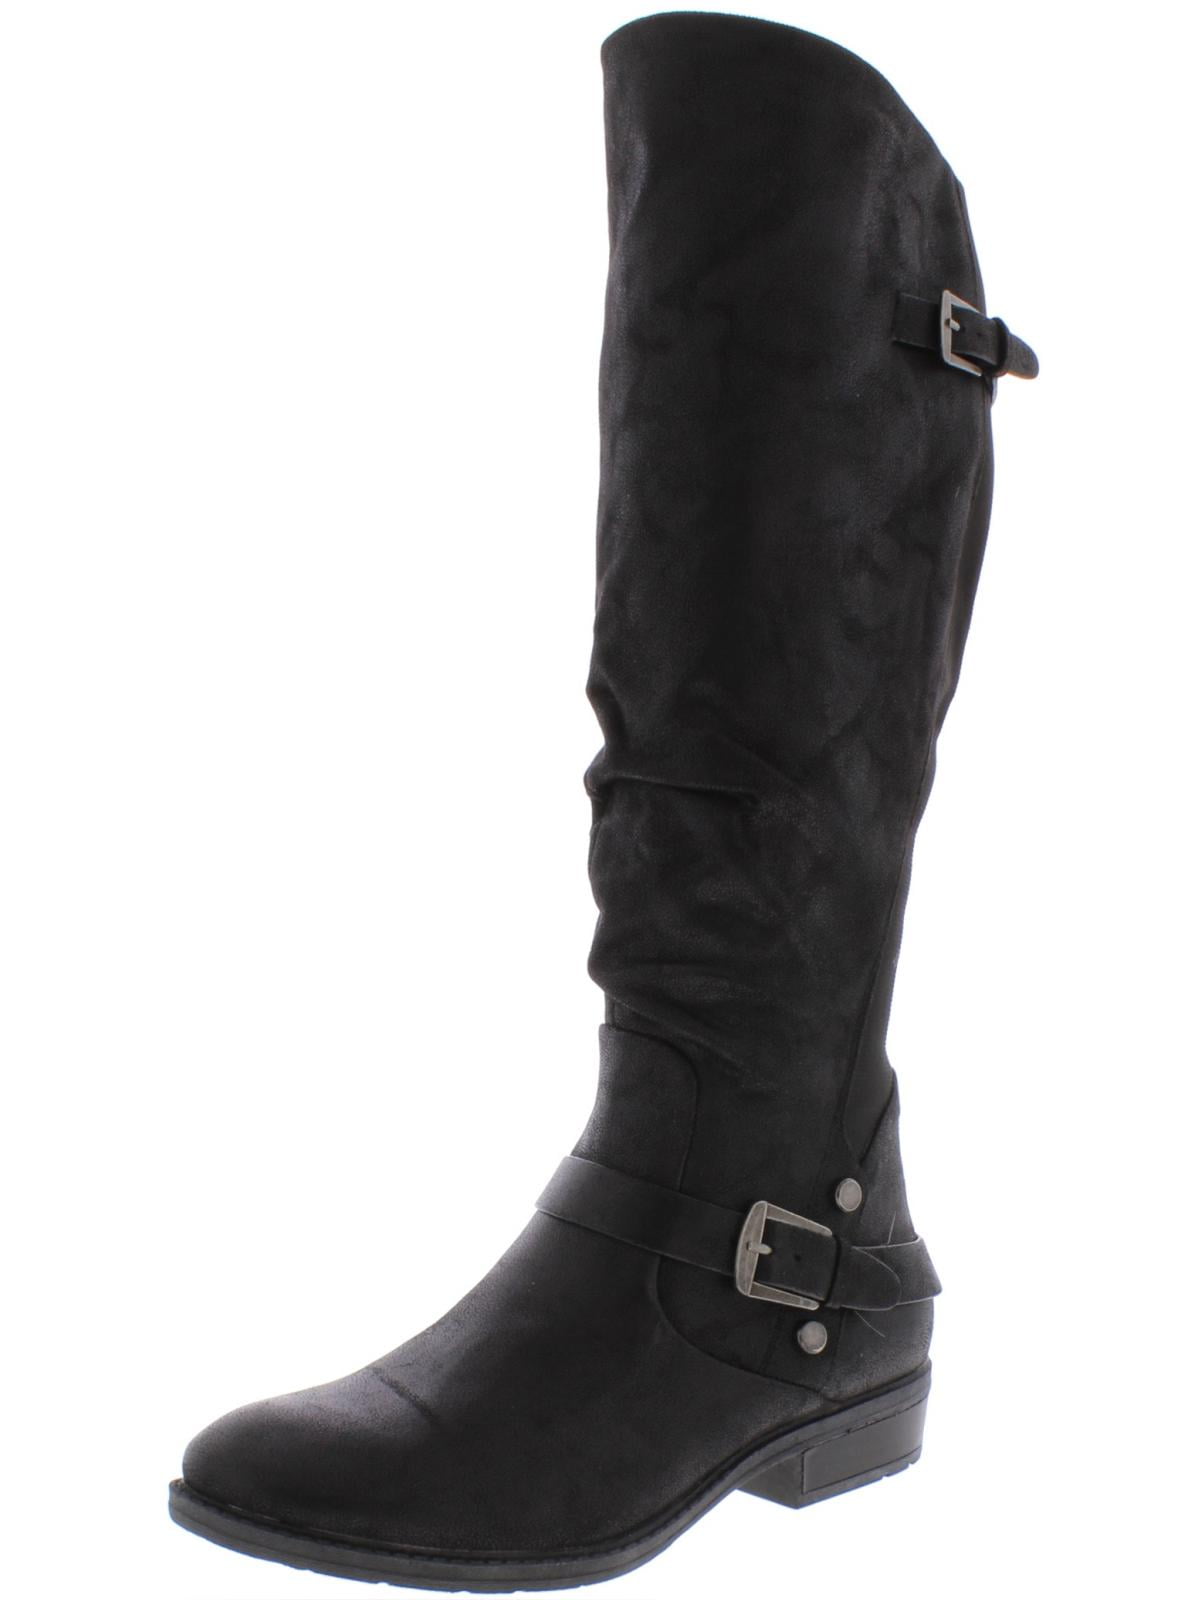 Bare Traps Womens Ingrid Almond Toe Mid-Calf Fashion Boots Black 1 Size 7.5 